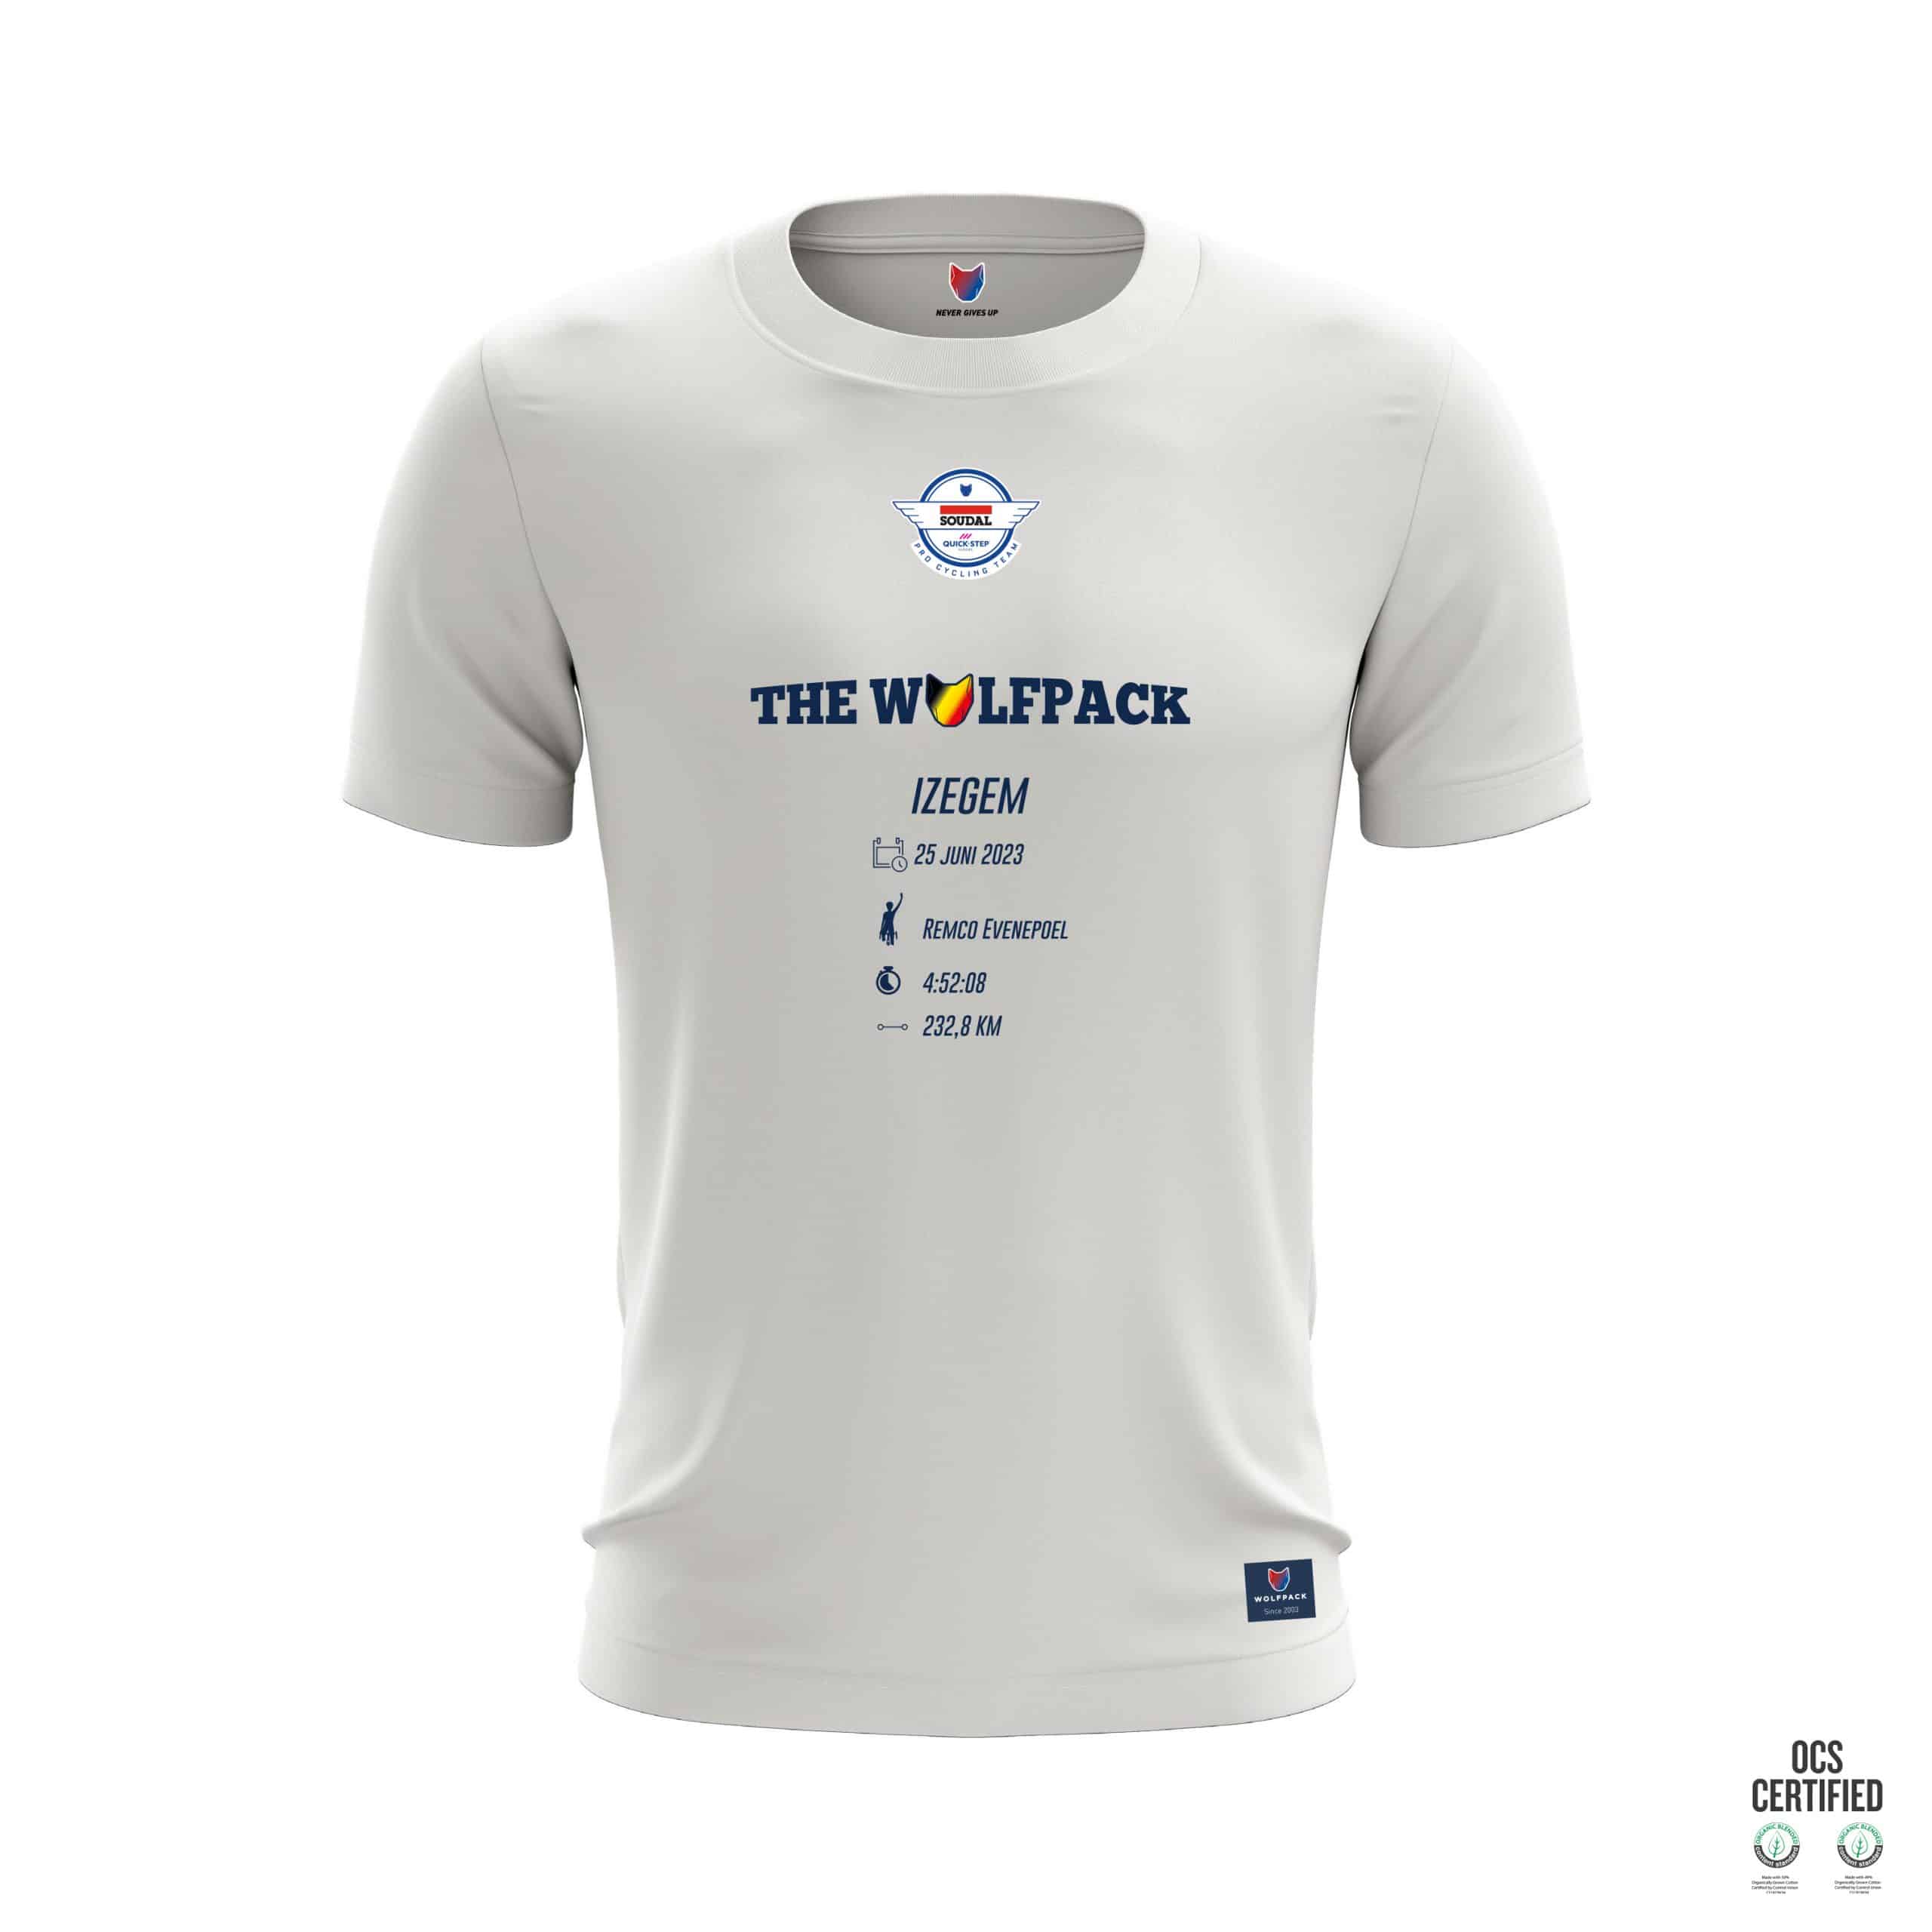 Remco Evenepoel Belgian Champion T-shirt - Off White